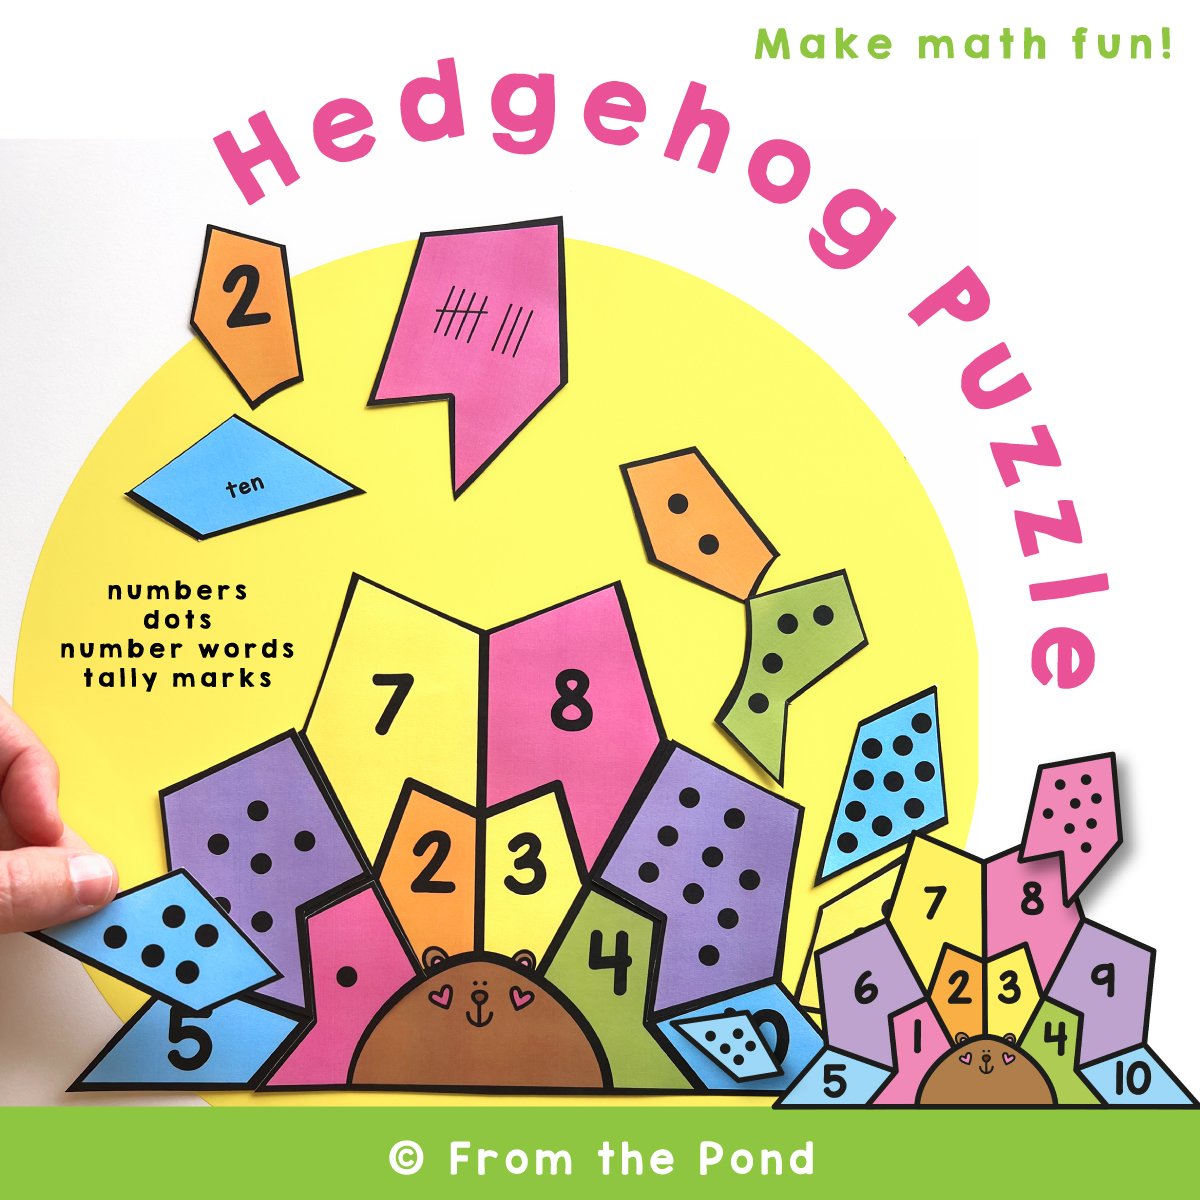 Hedgehog Puzzle